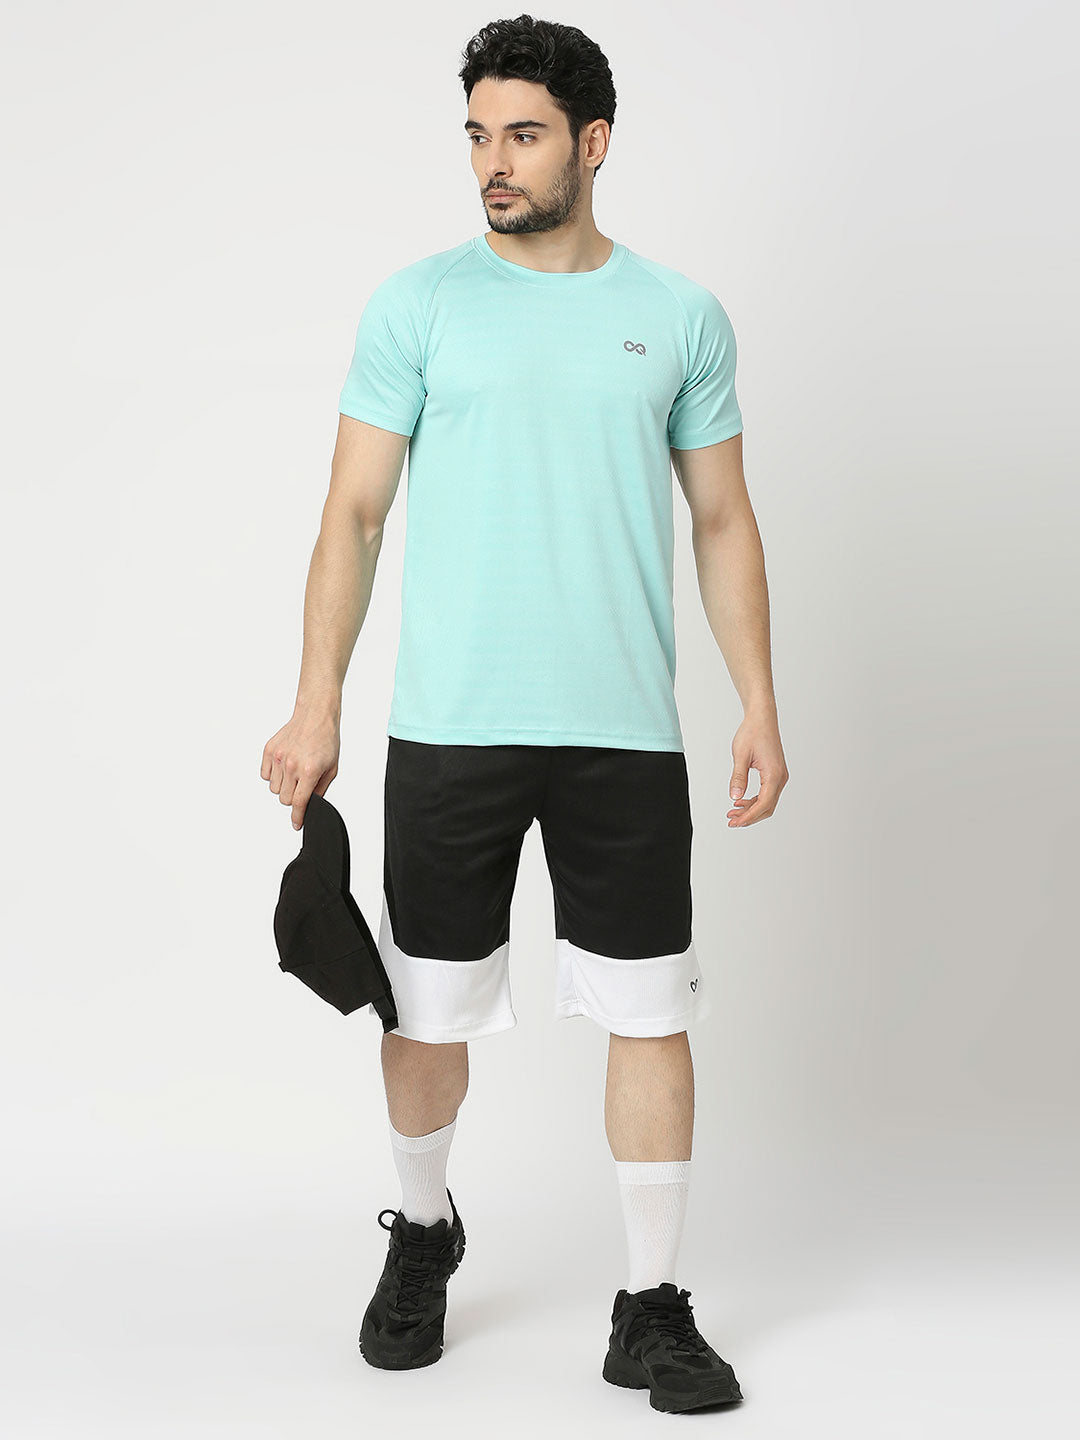 Men's Sports T-Shirt - Mint Green